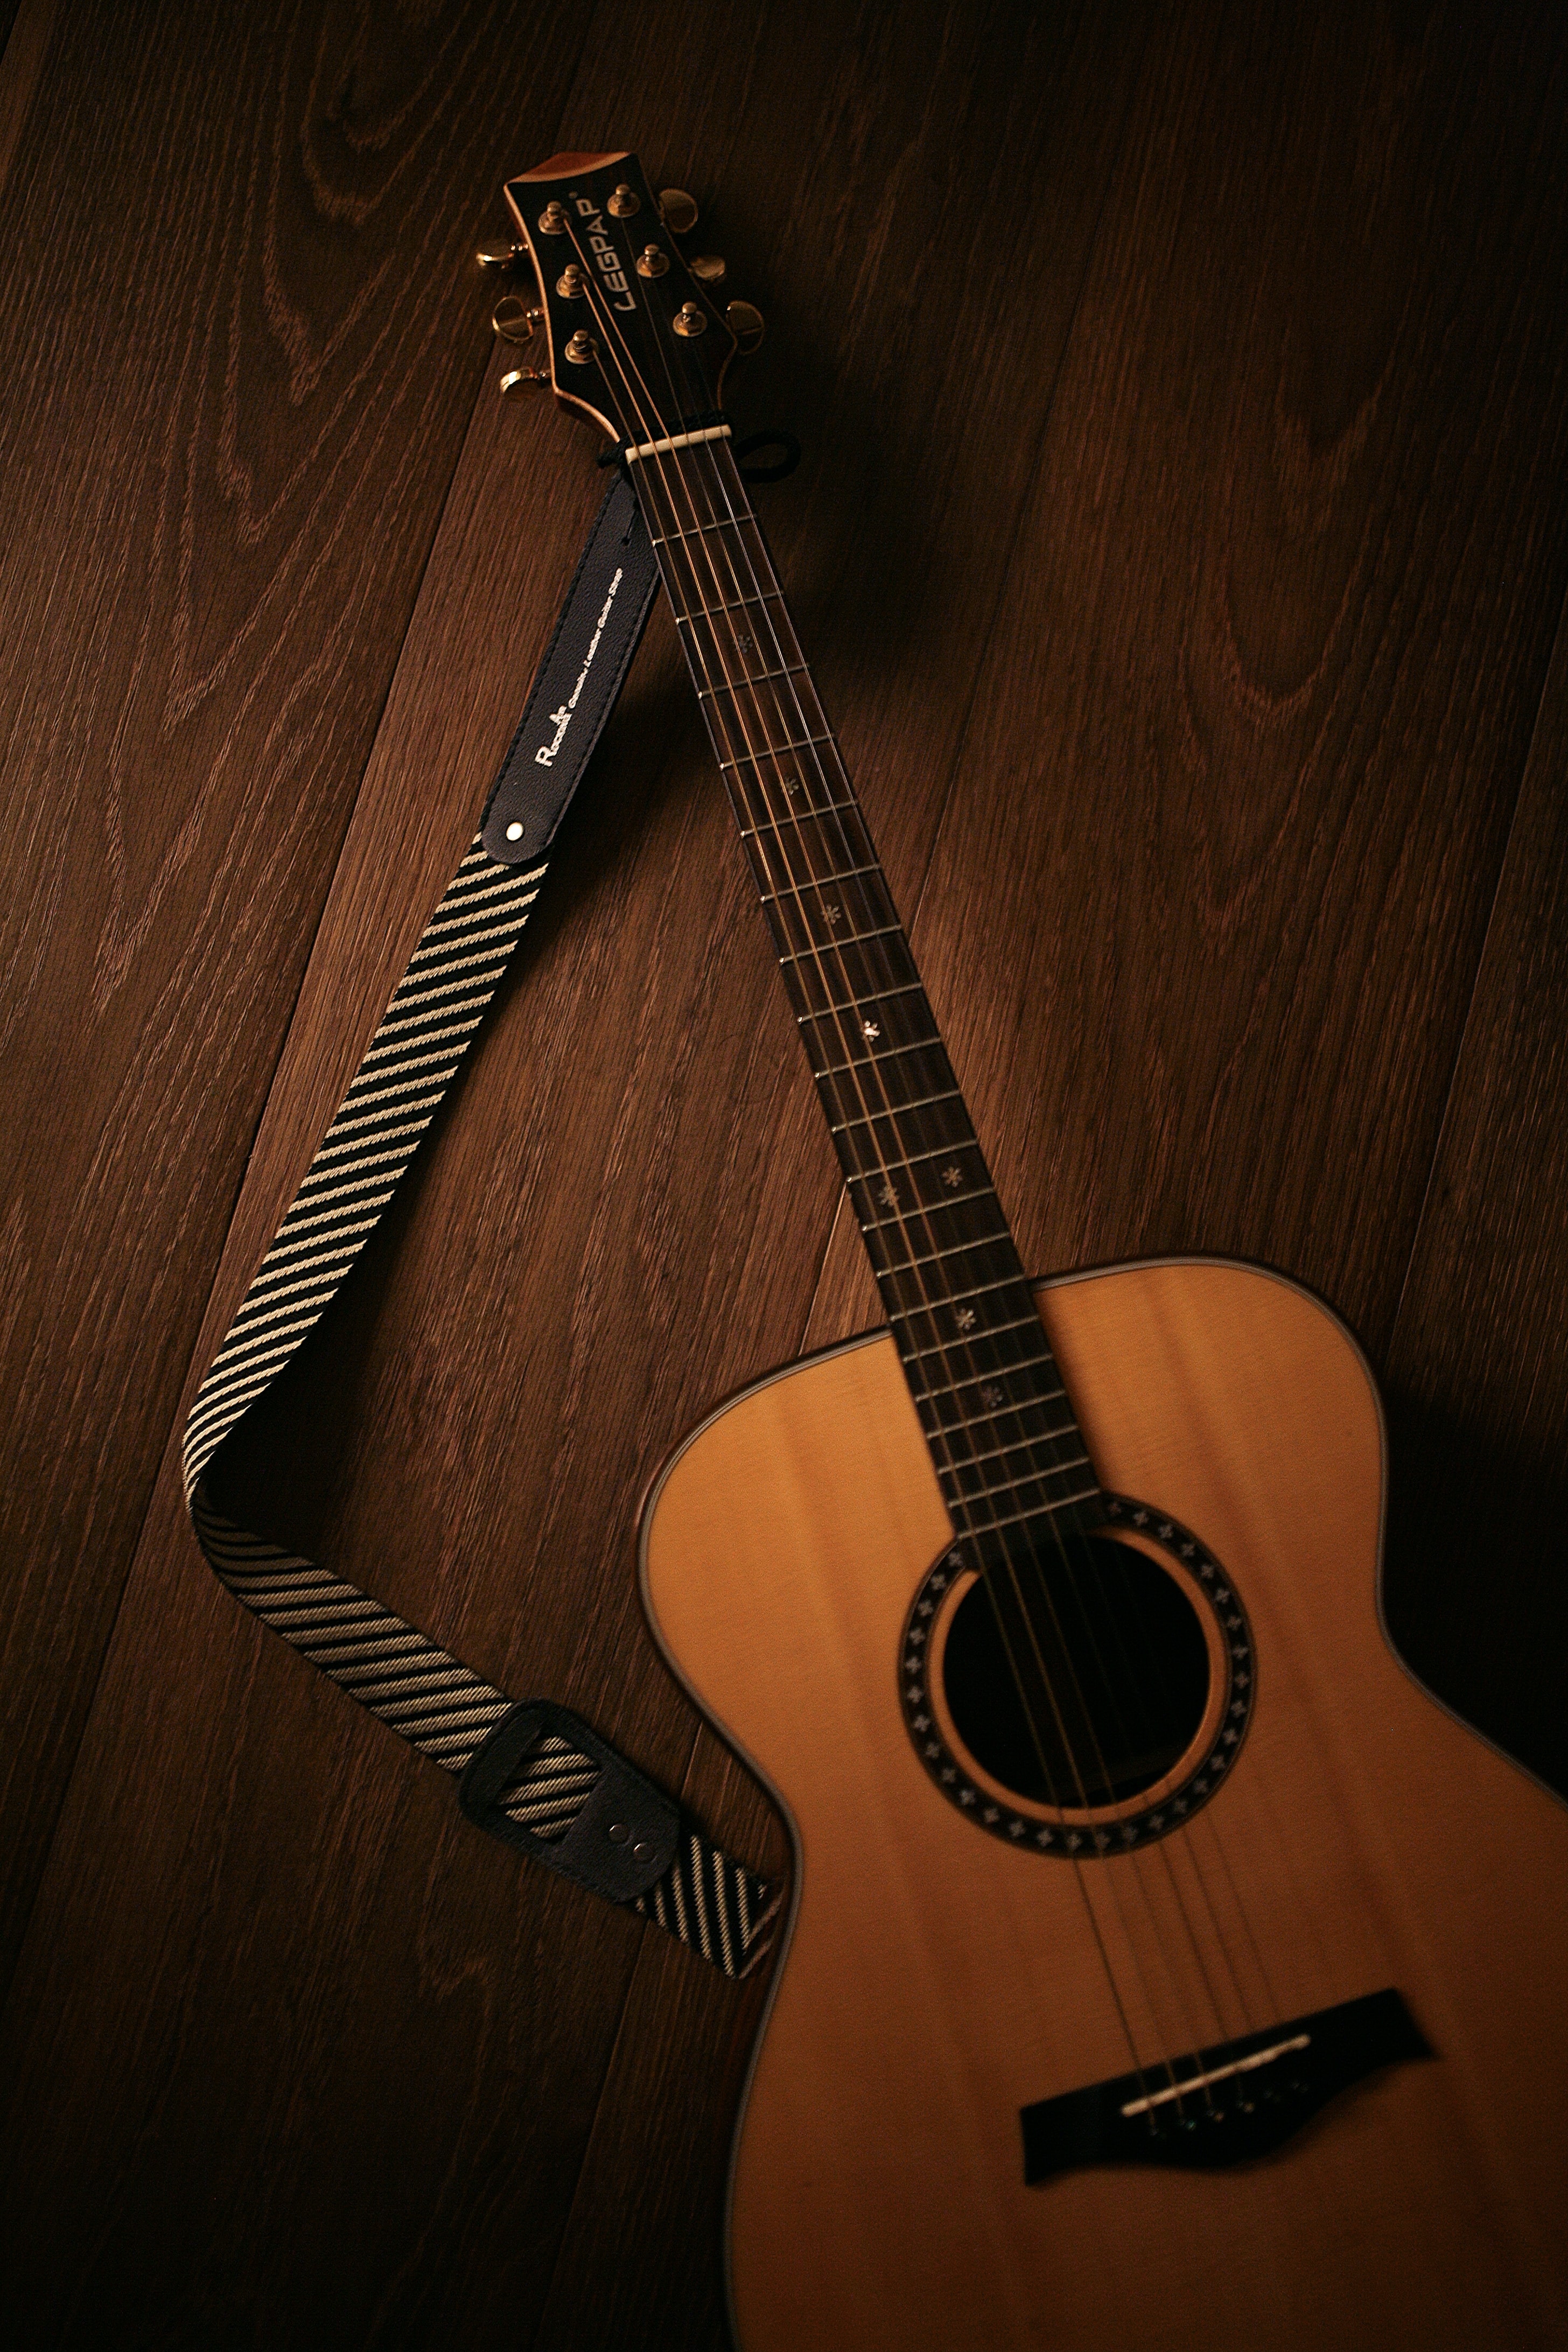 guitar, music, acoustic guitar, musical instrument, brown, wood, wooden Aesthetic wallpaper